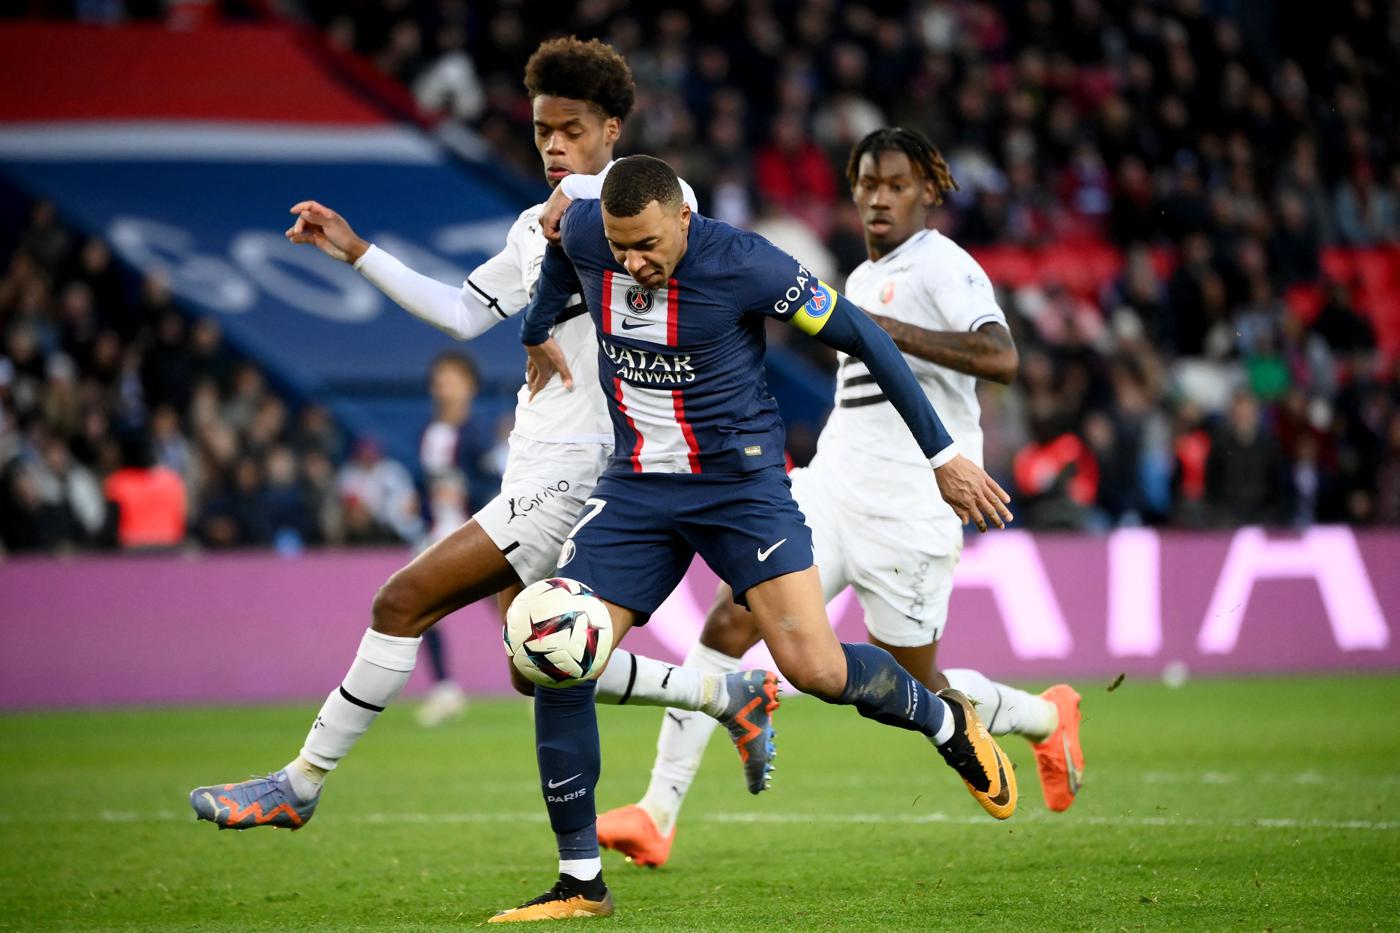 PSG vs Rennes - 0:2. French Championship, round 28. Match review, statistics